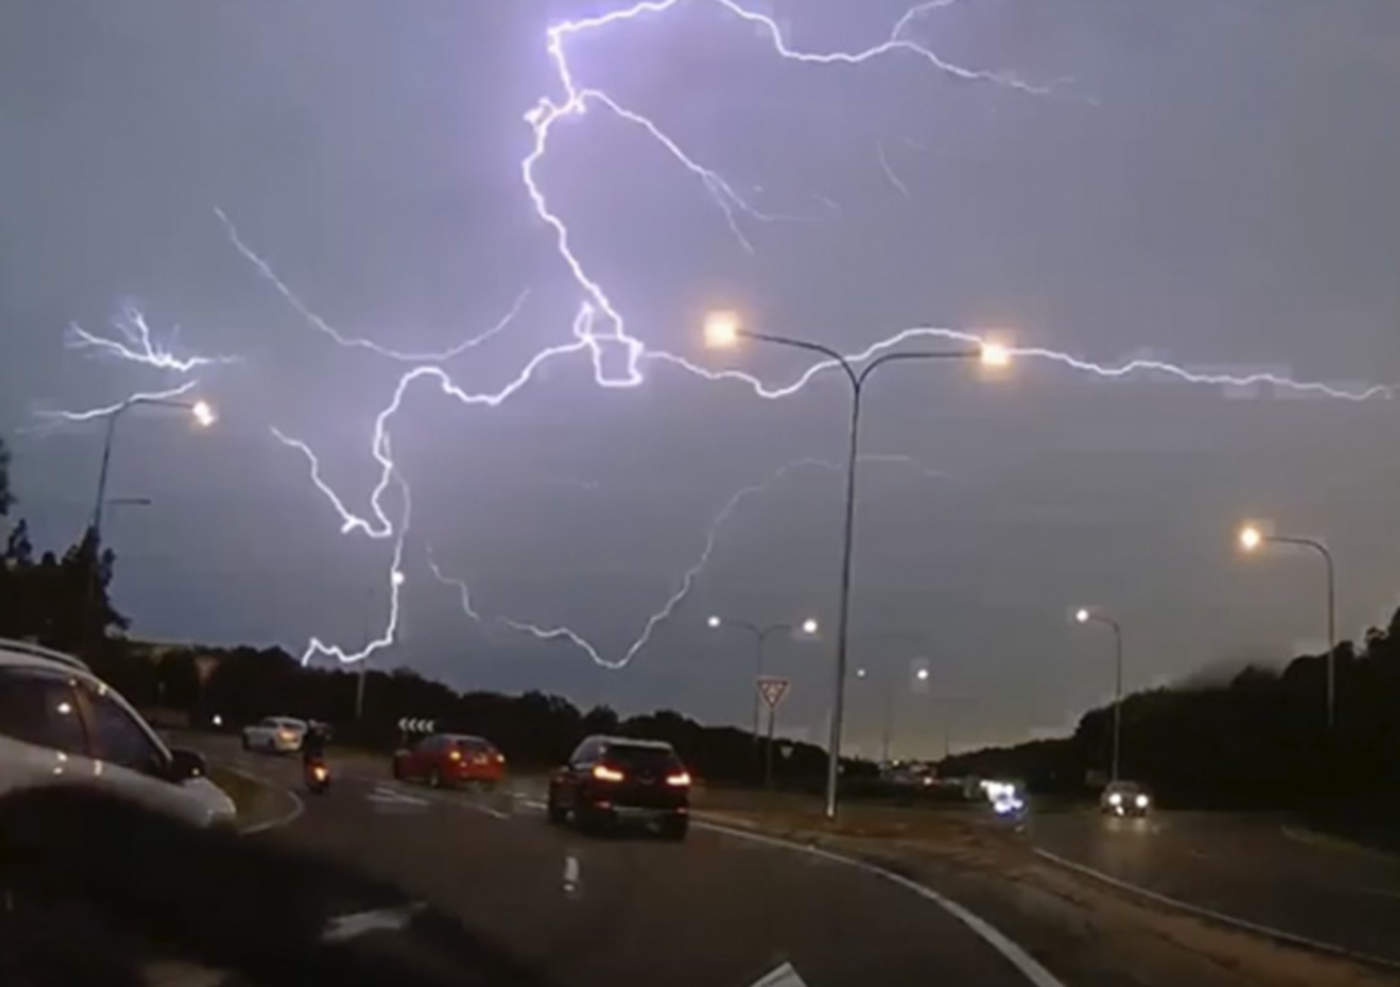 Asombroso video de relámpagos durante tormenta se hace viral